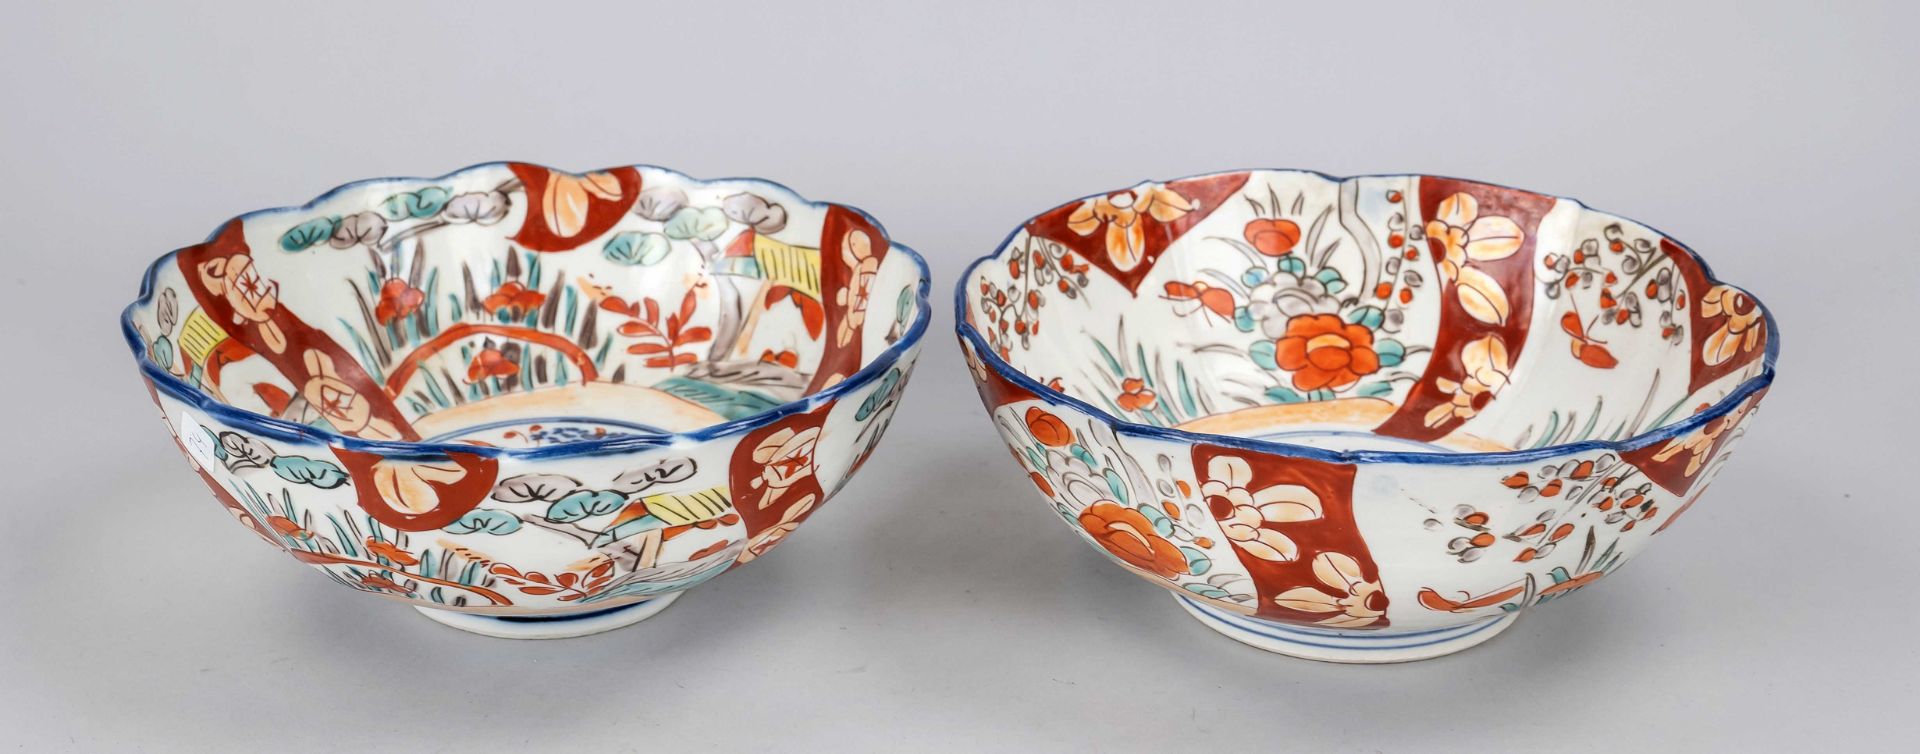 Pair of beautiful Imari bowls, Japan, probably Meiji period(1868-1912) around 1900, porcelain